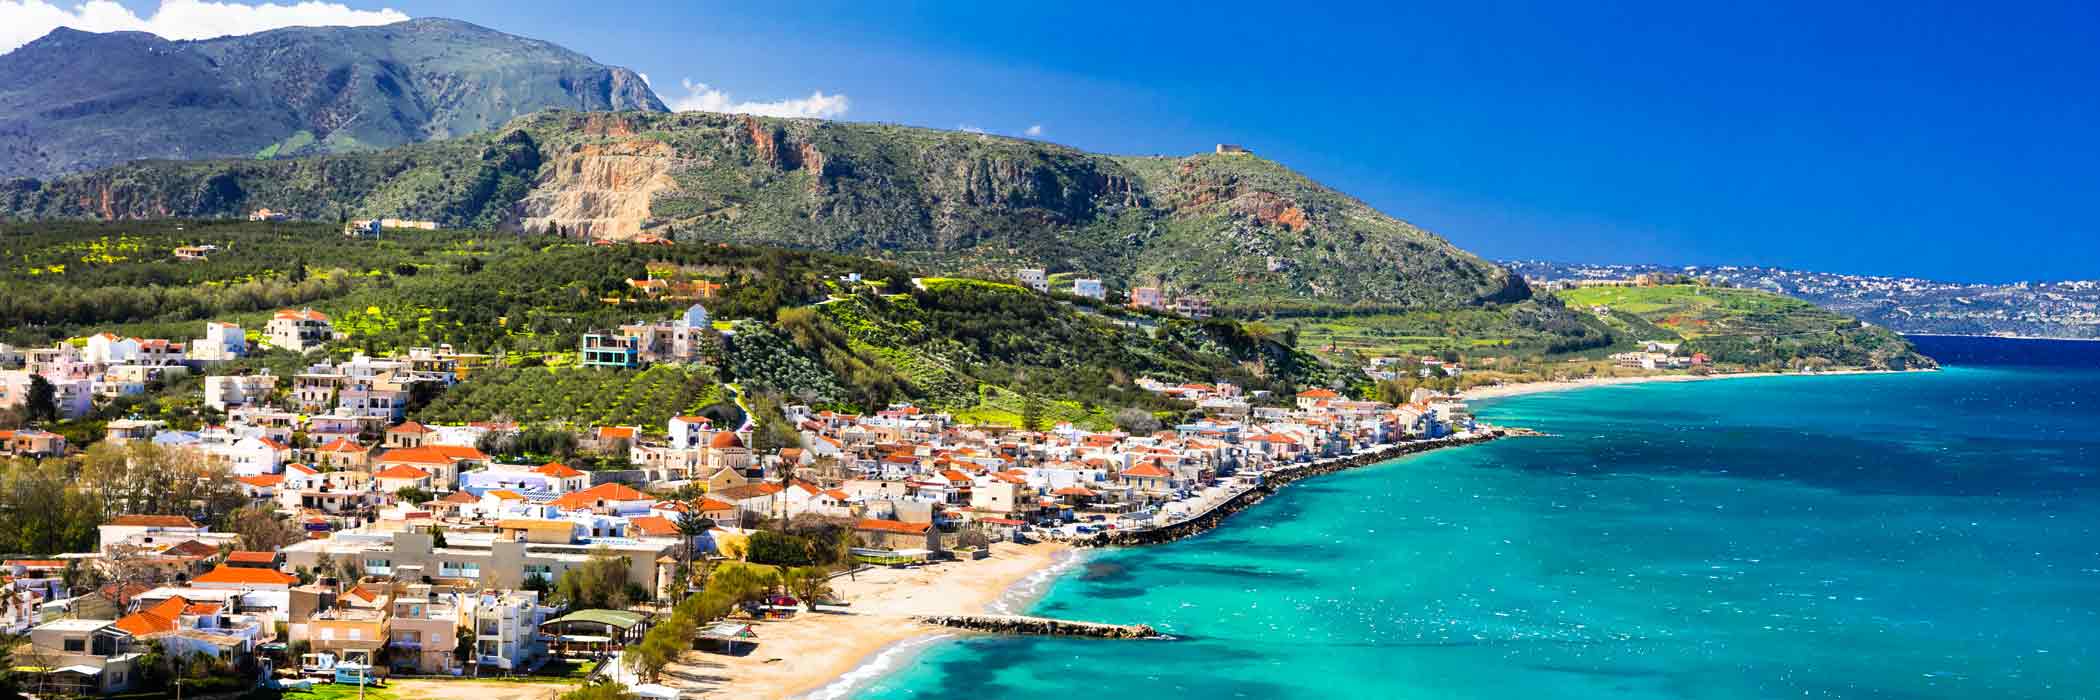 Holidays To Crete